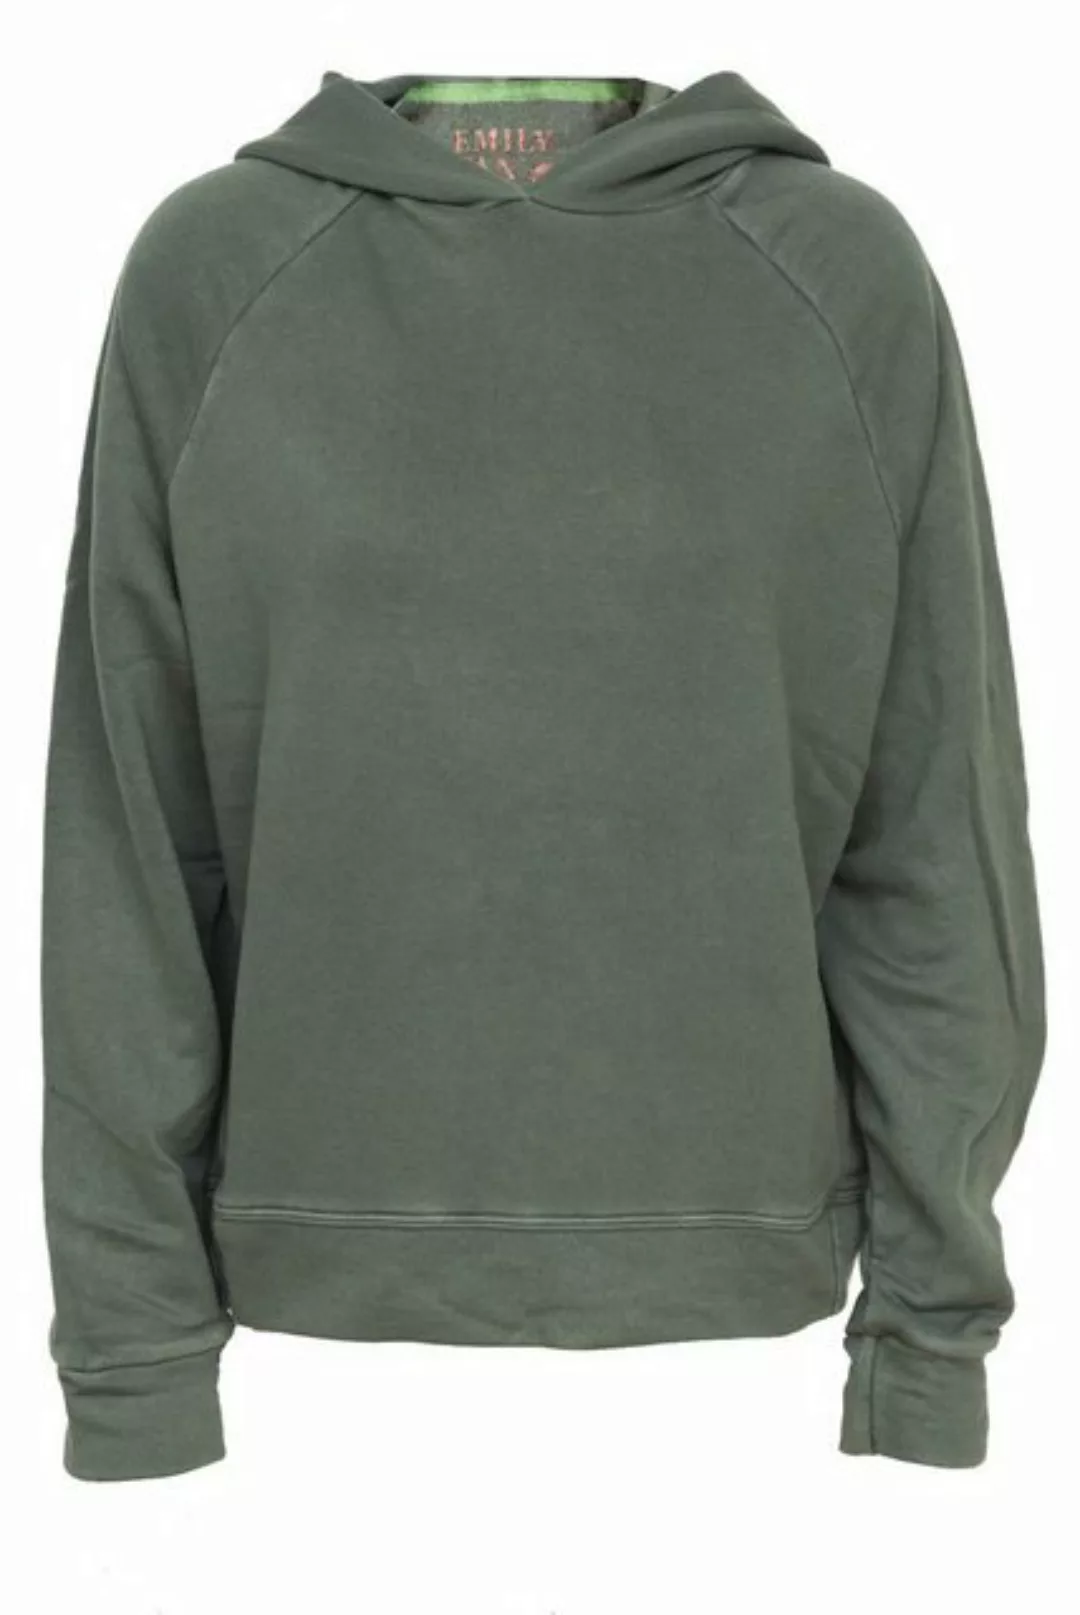 Emily Van Den Bergh Kapuzensweatshirt Sweatshirt 6081-505 günstig online kaufen